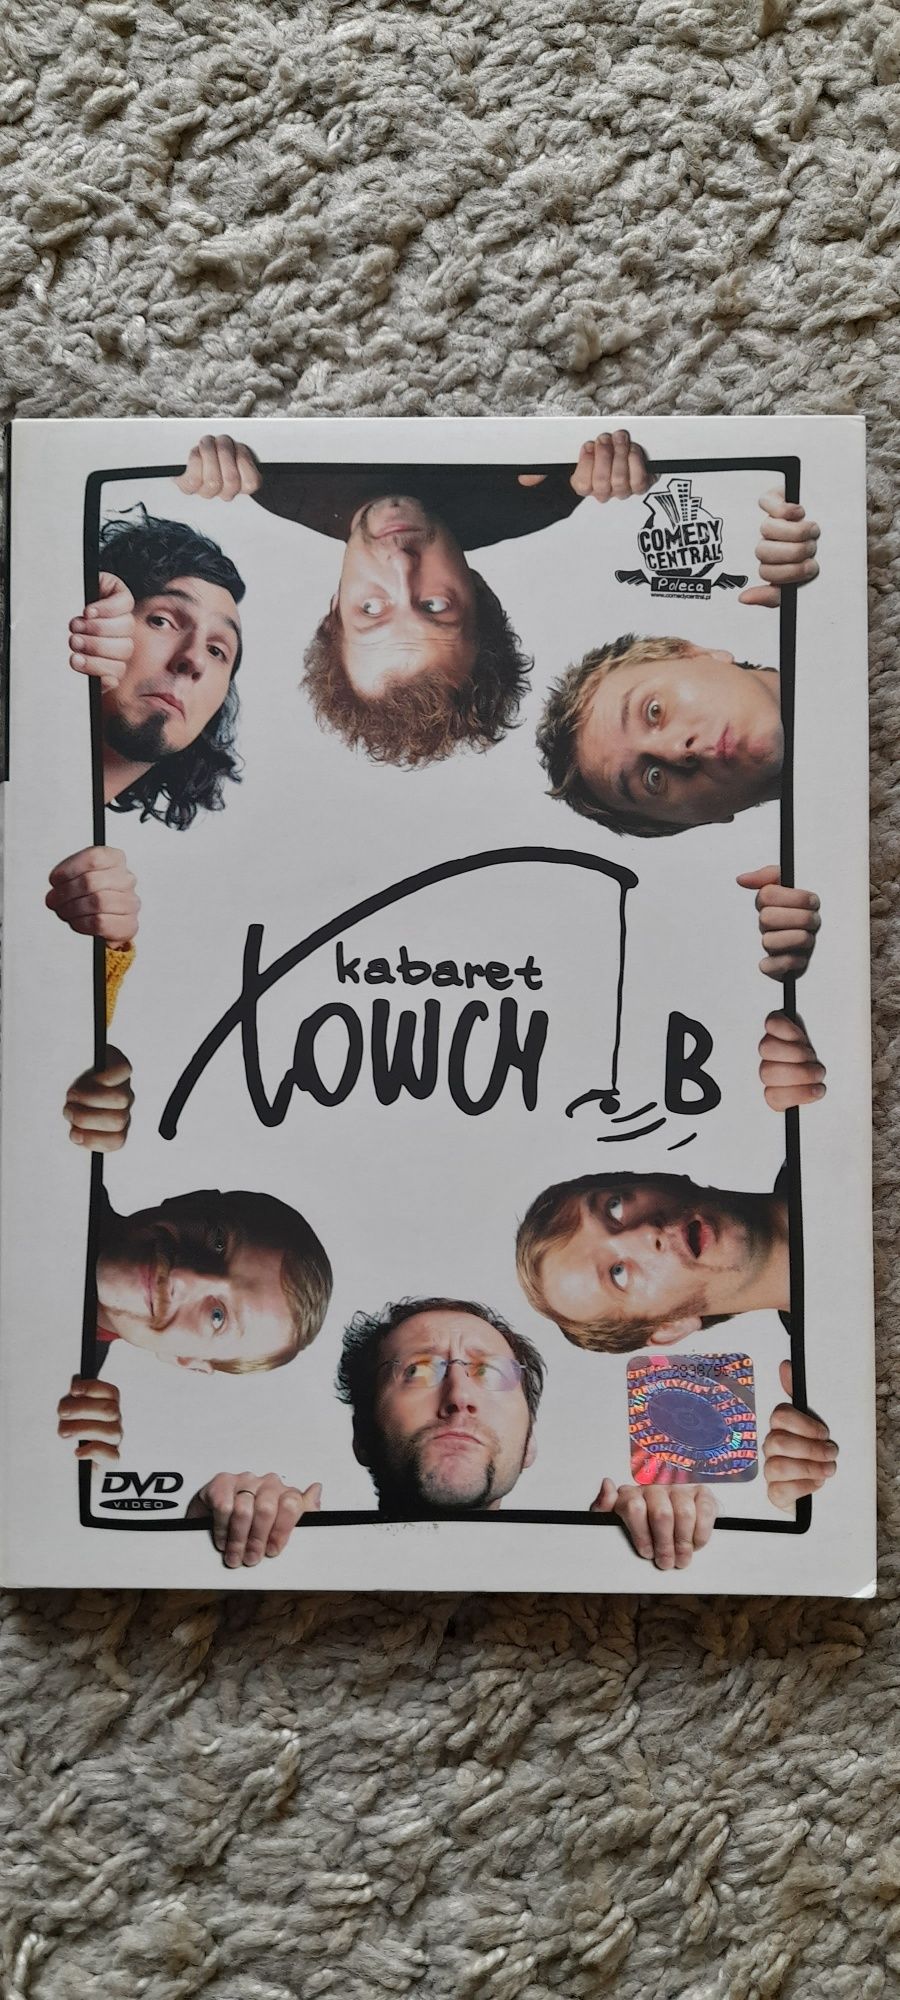 Kabaret Łowcy.B - dvd 2008